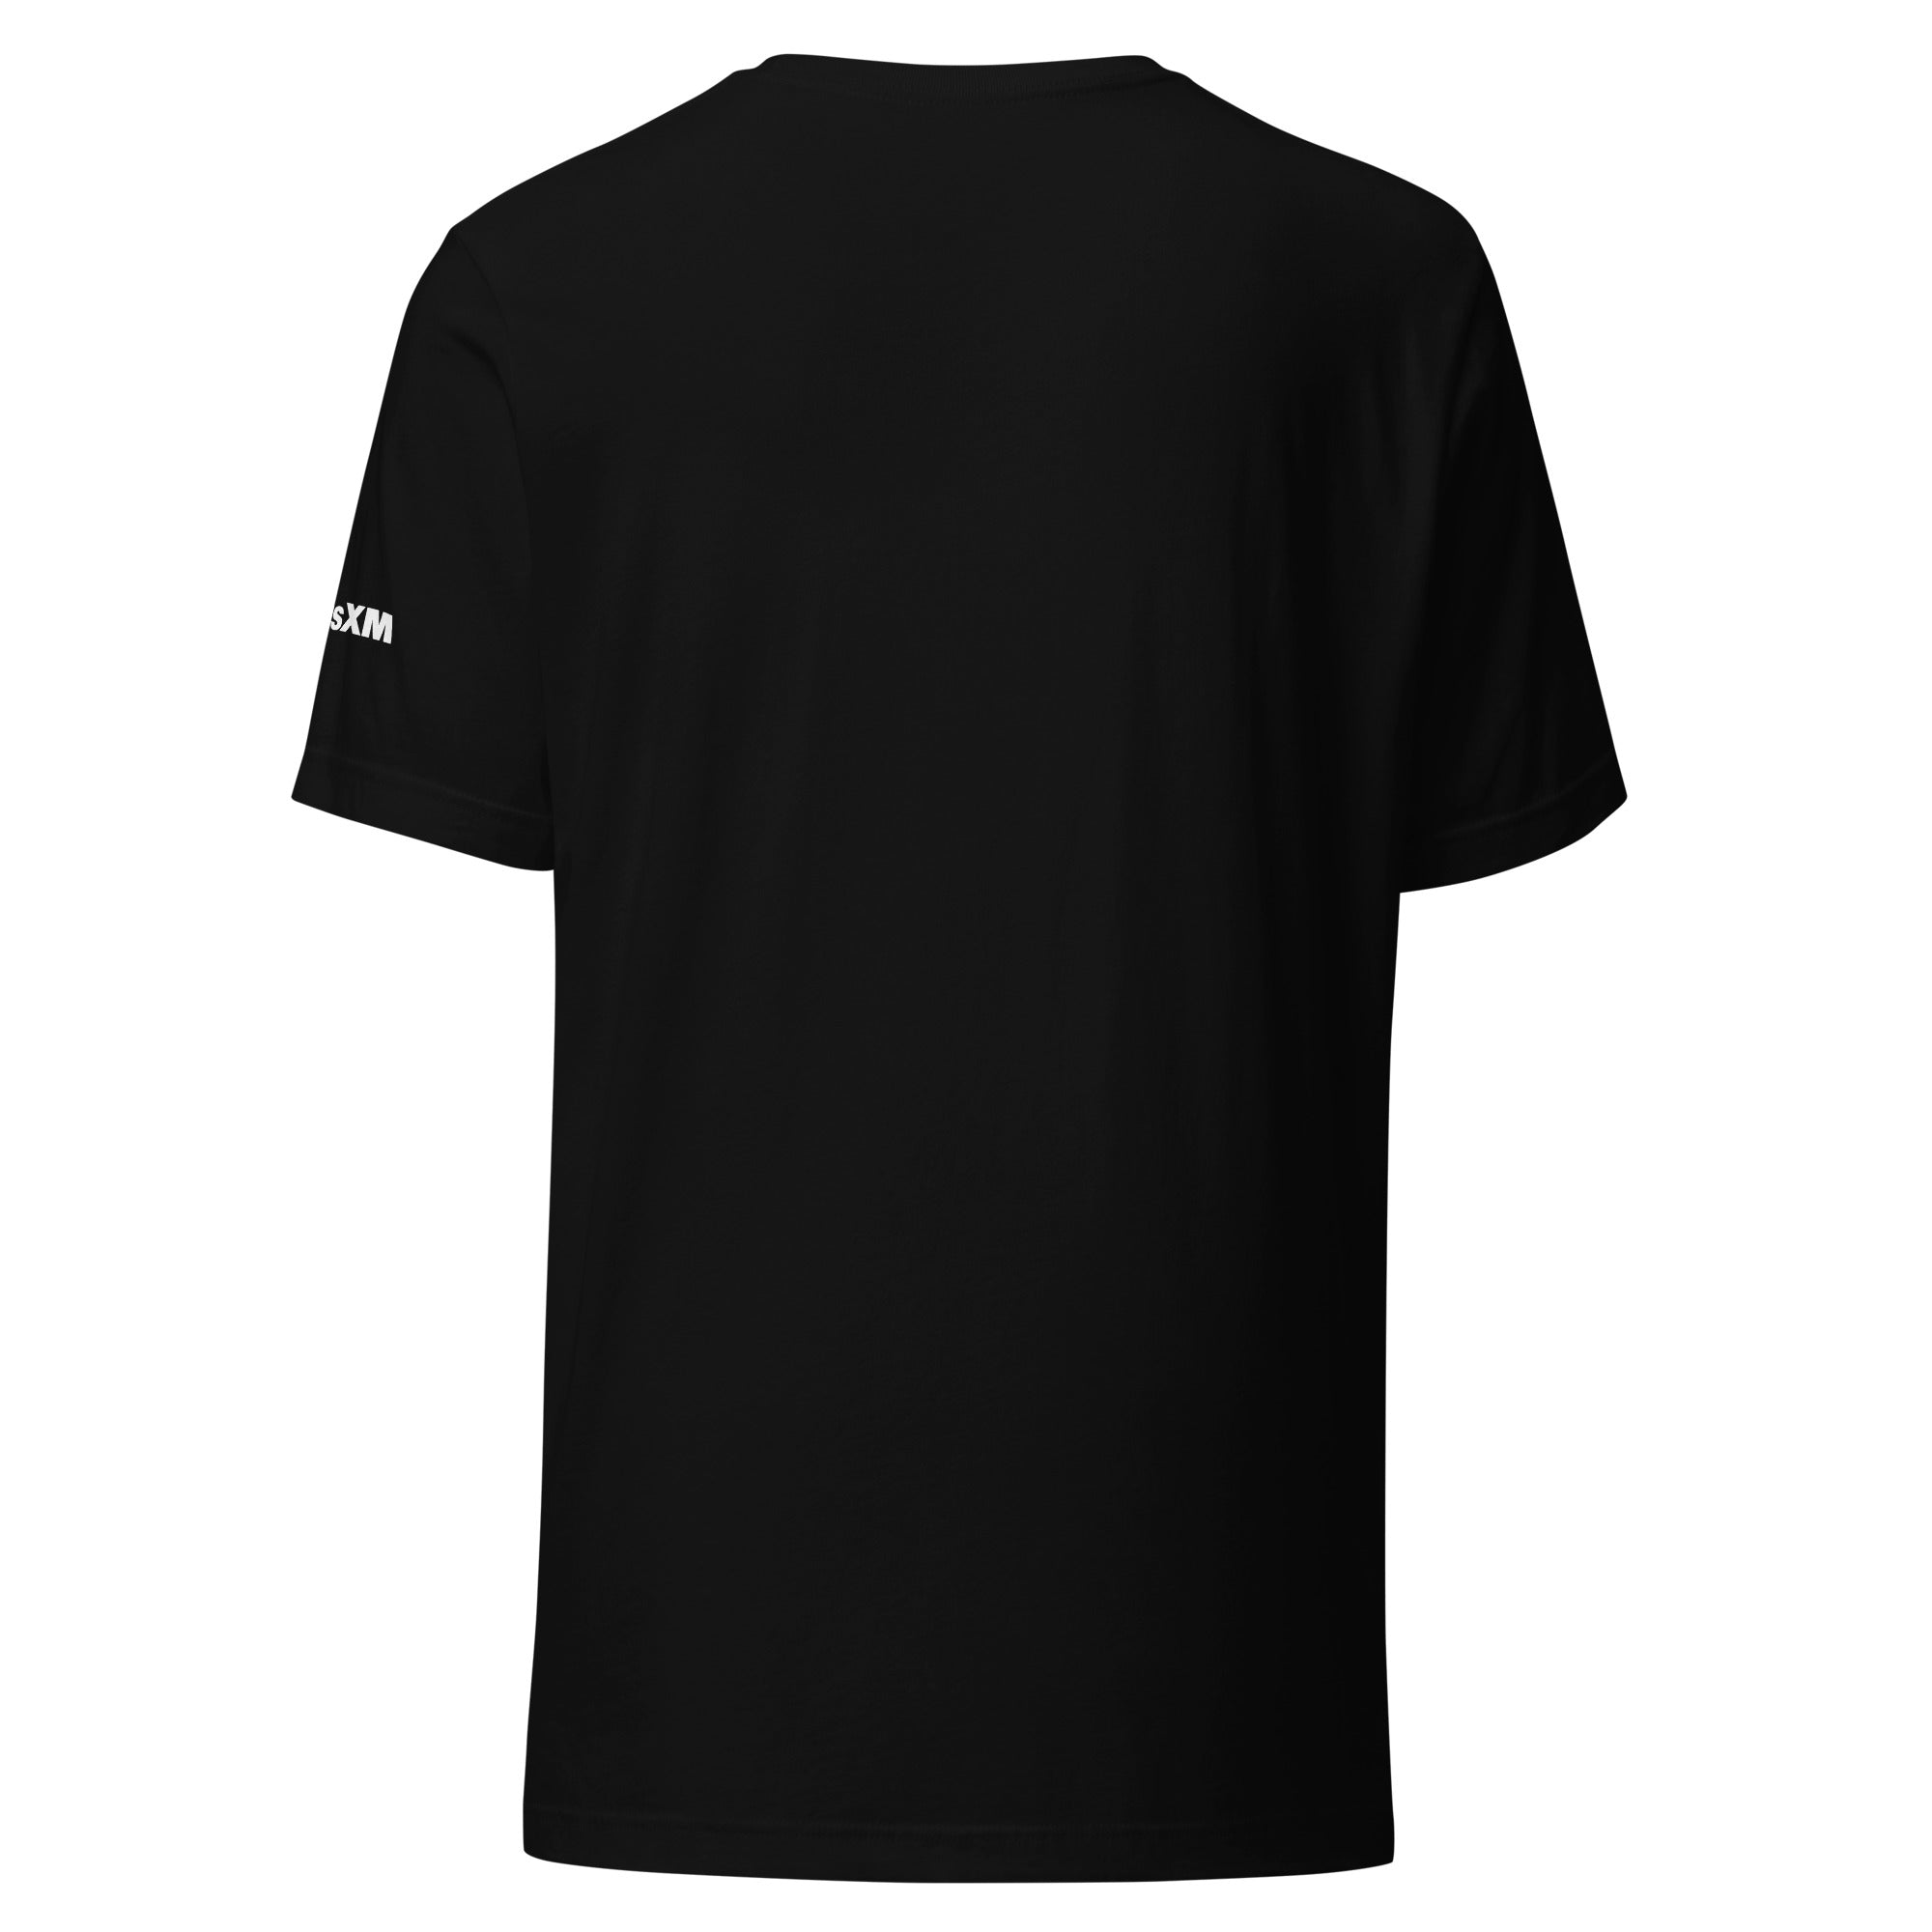 BPM: T-shirt (Black)